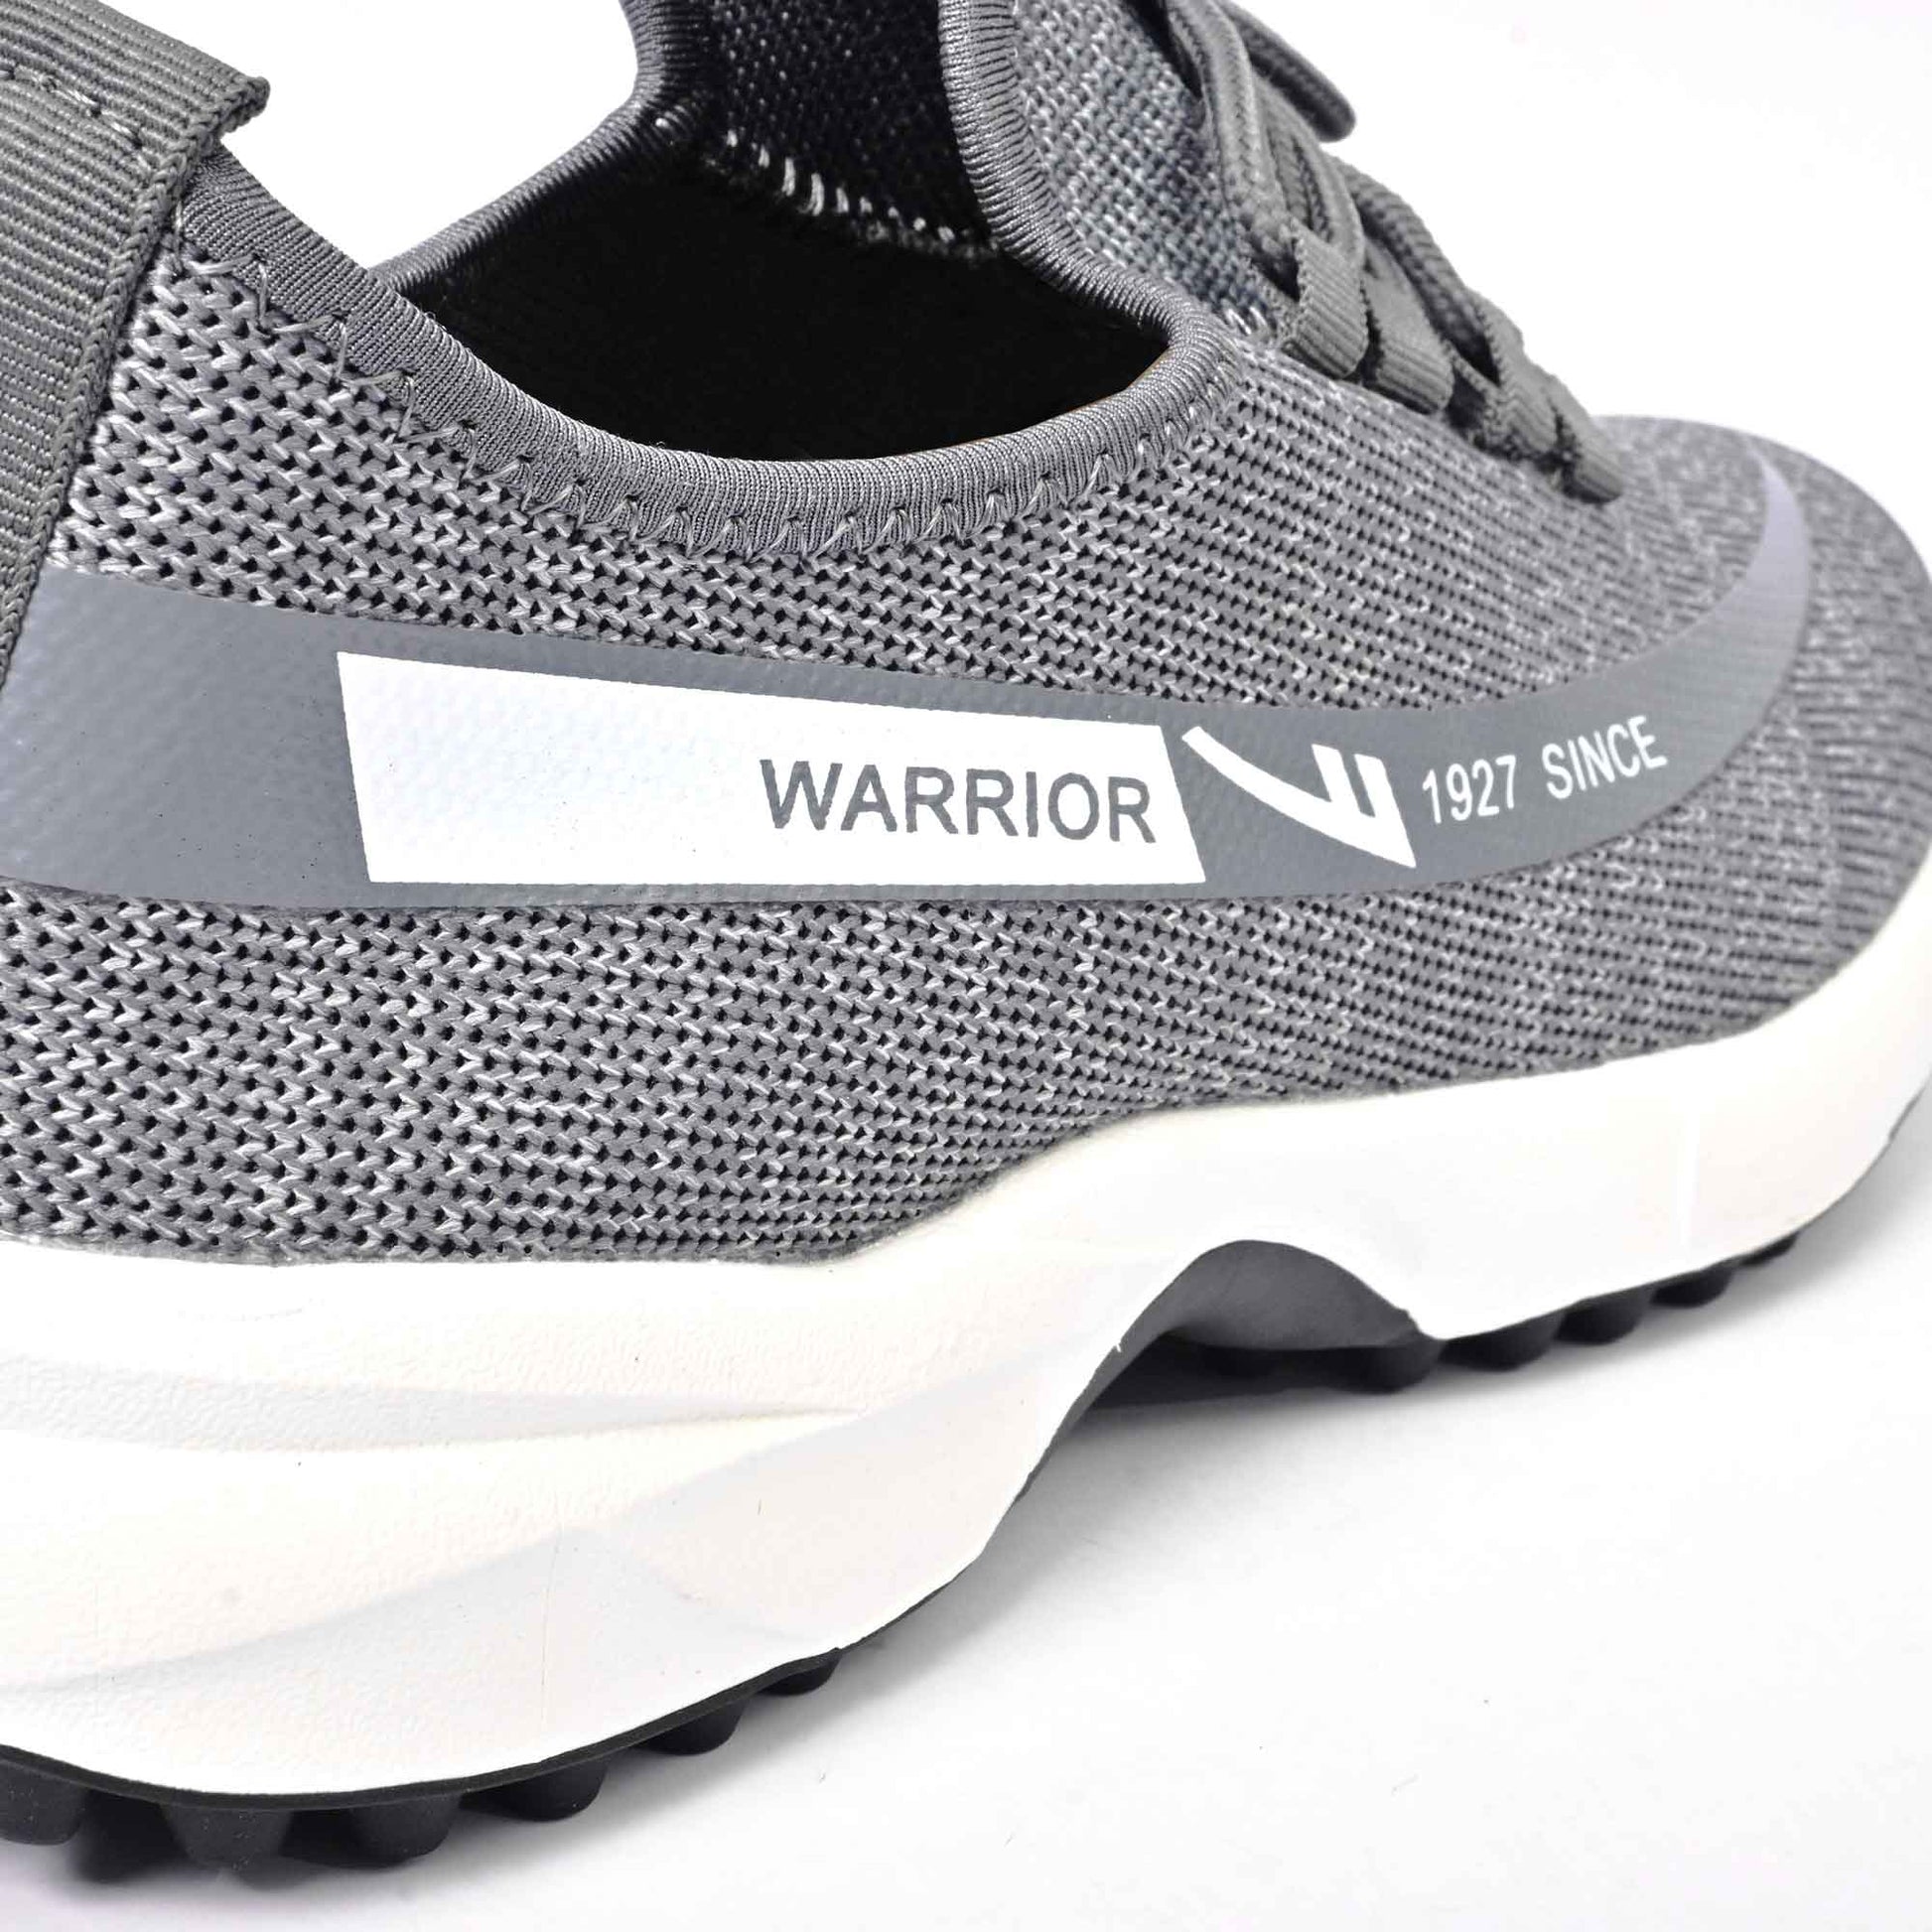 Warrior Luxury Brand Air Cushion Shoes For Women Fashion Walking